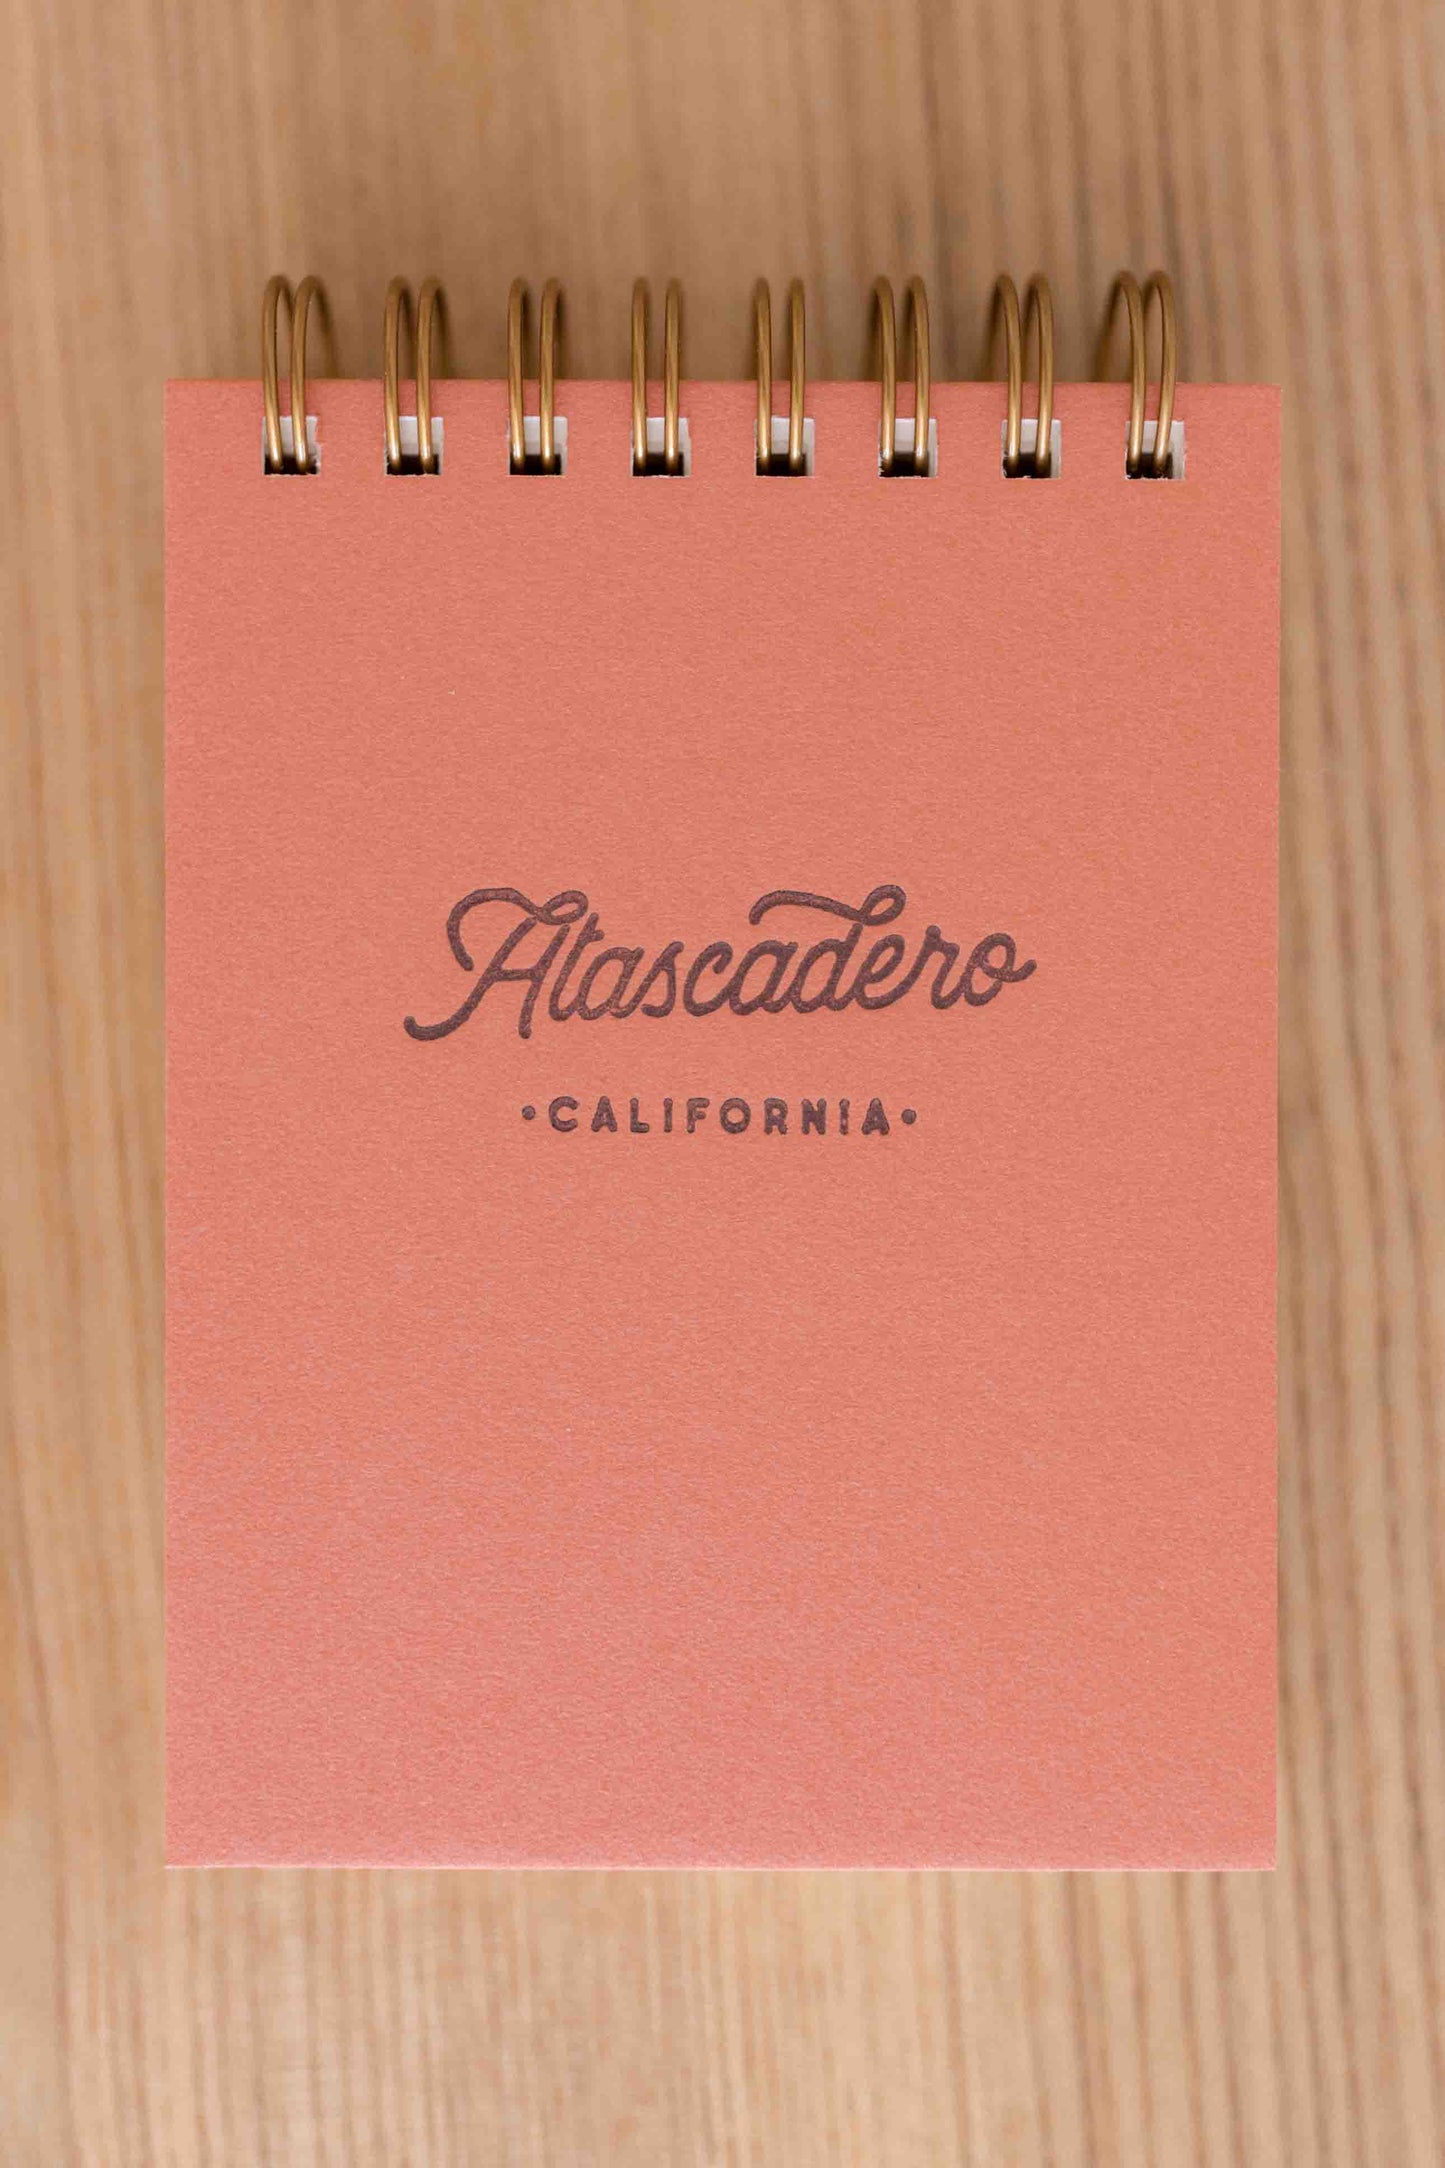 Atascadero Mini Notebook